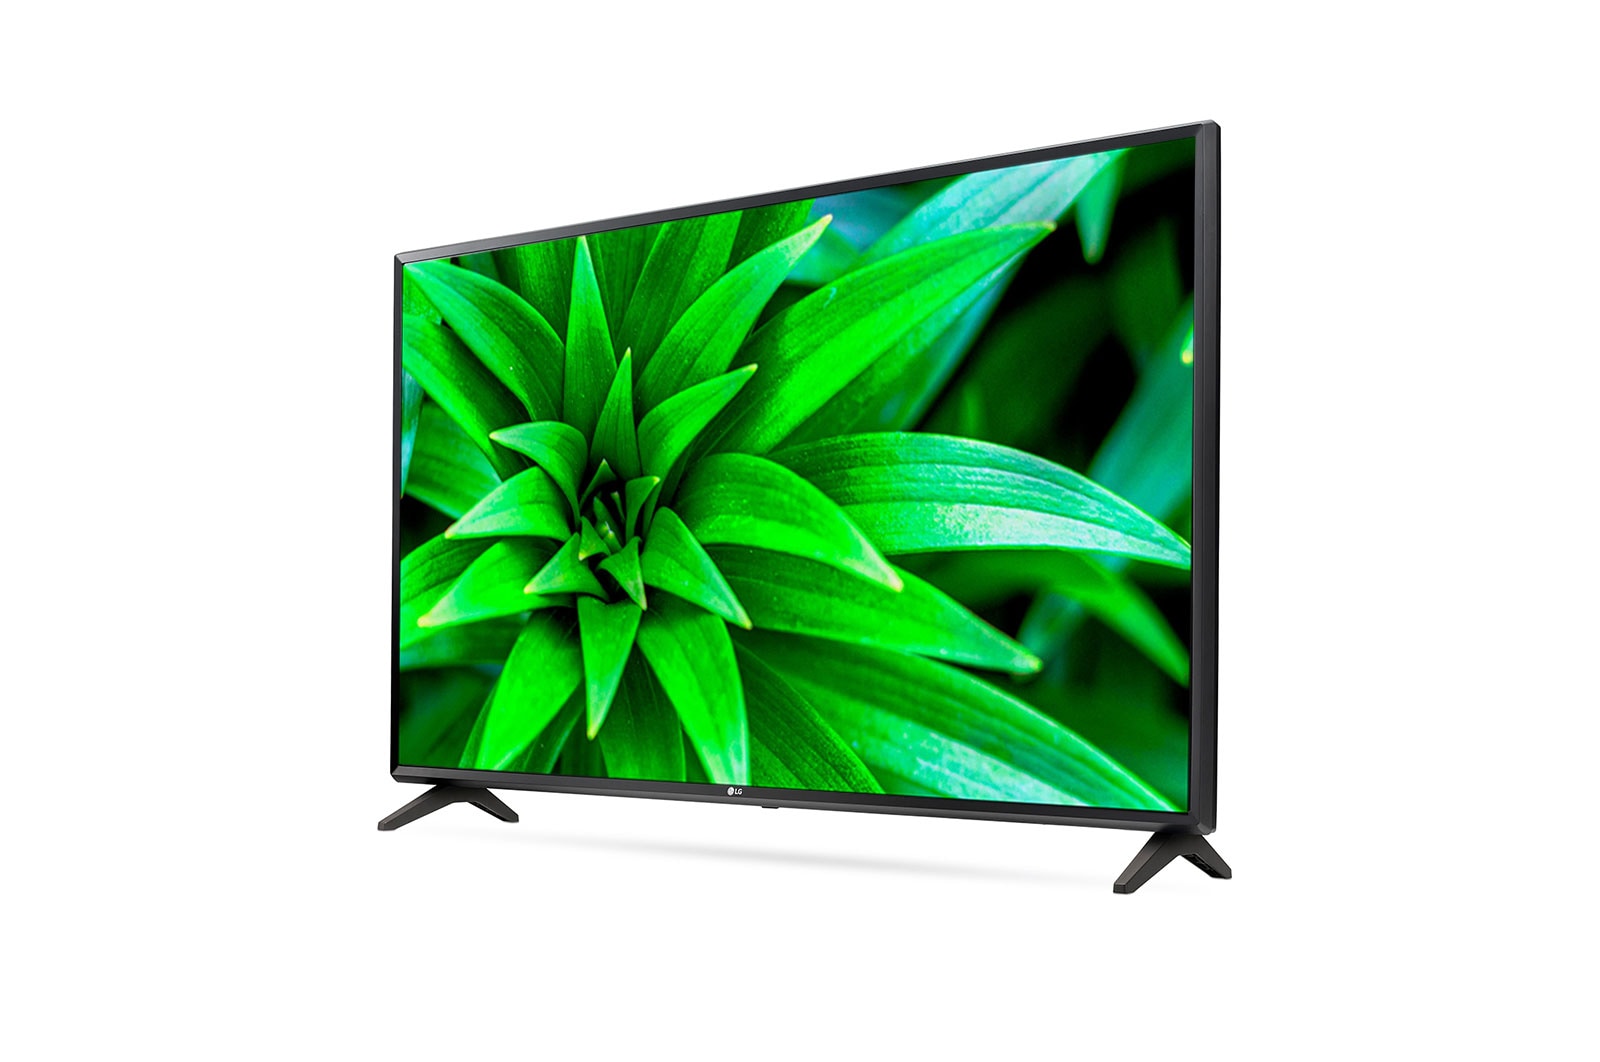 LG LM57 32 (81.28 cm) Smart HD TV 32LM576BPTC